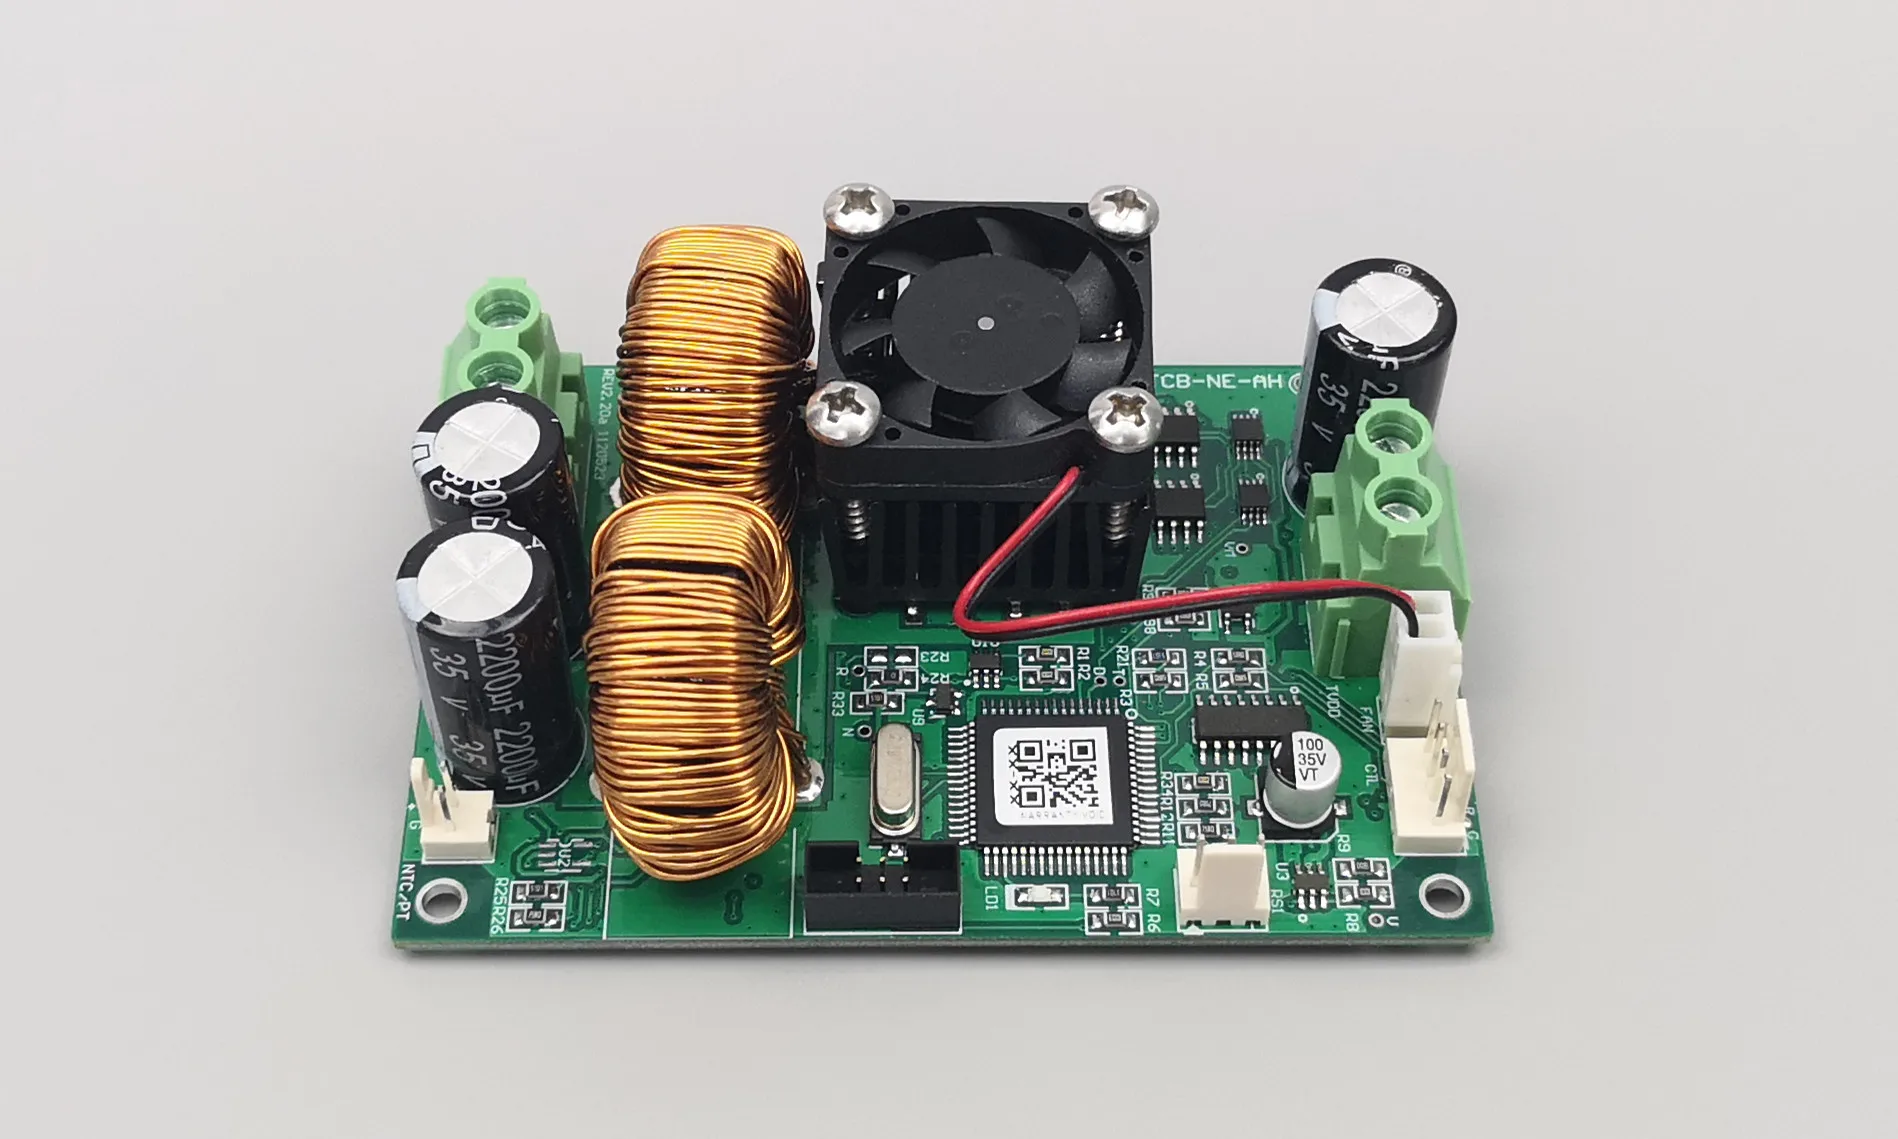 

TCB-NE-AH, Semiconductor Cooling Chip Temperature Control Board, TEC Thermostat, Precision 0.01, NE High Current